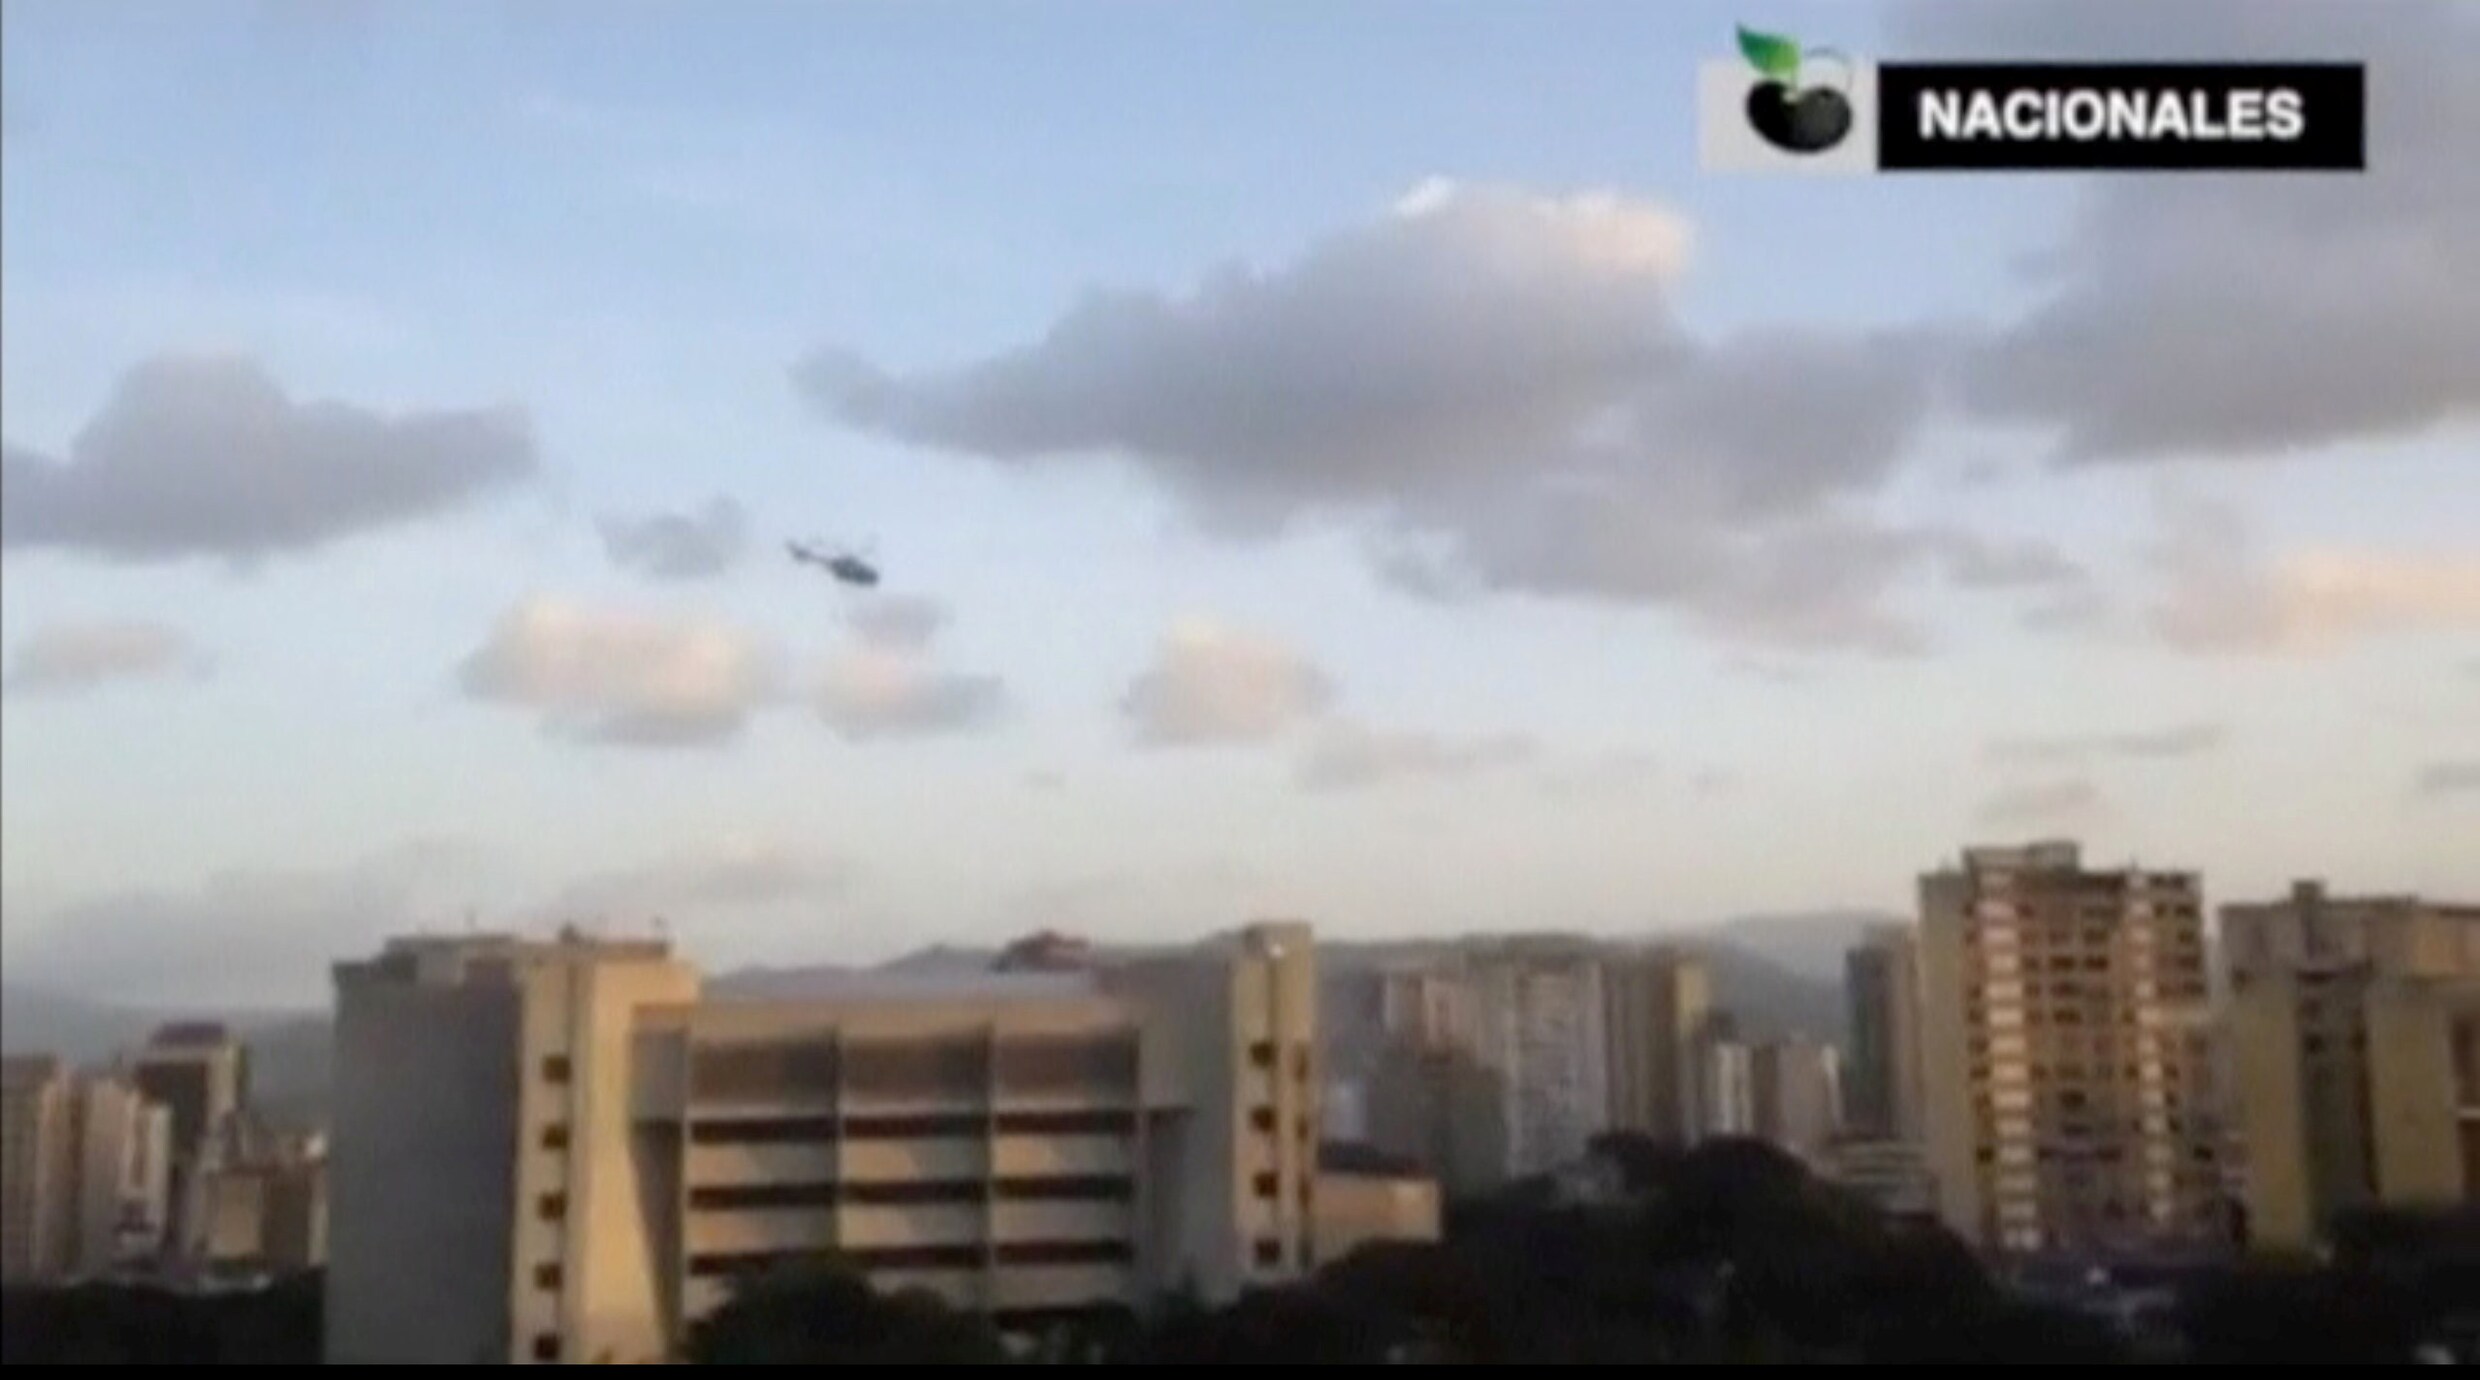 Granaataanval op Venezolaans hooggerechtshof vanuit politiehelikopter